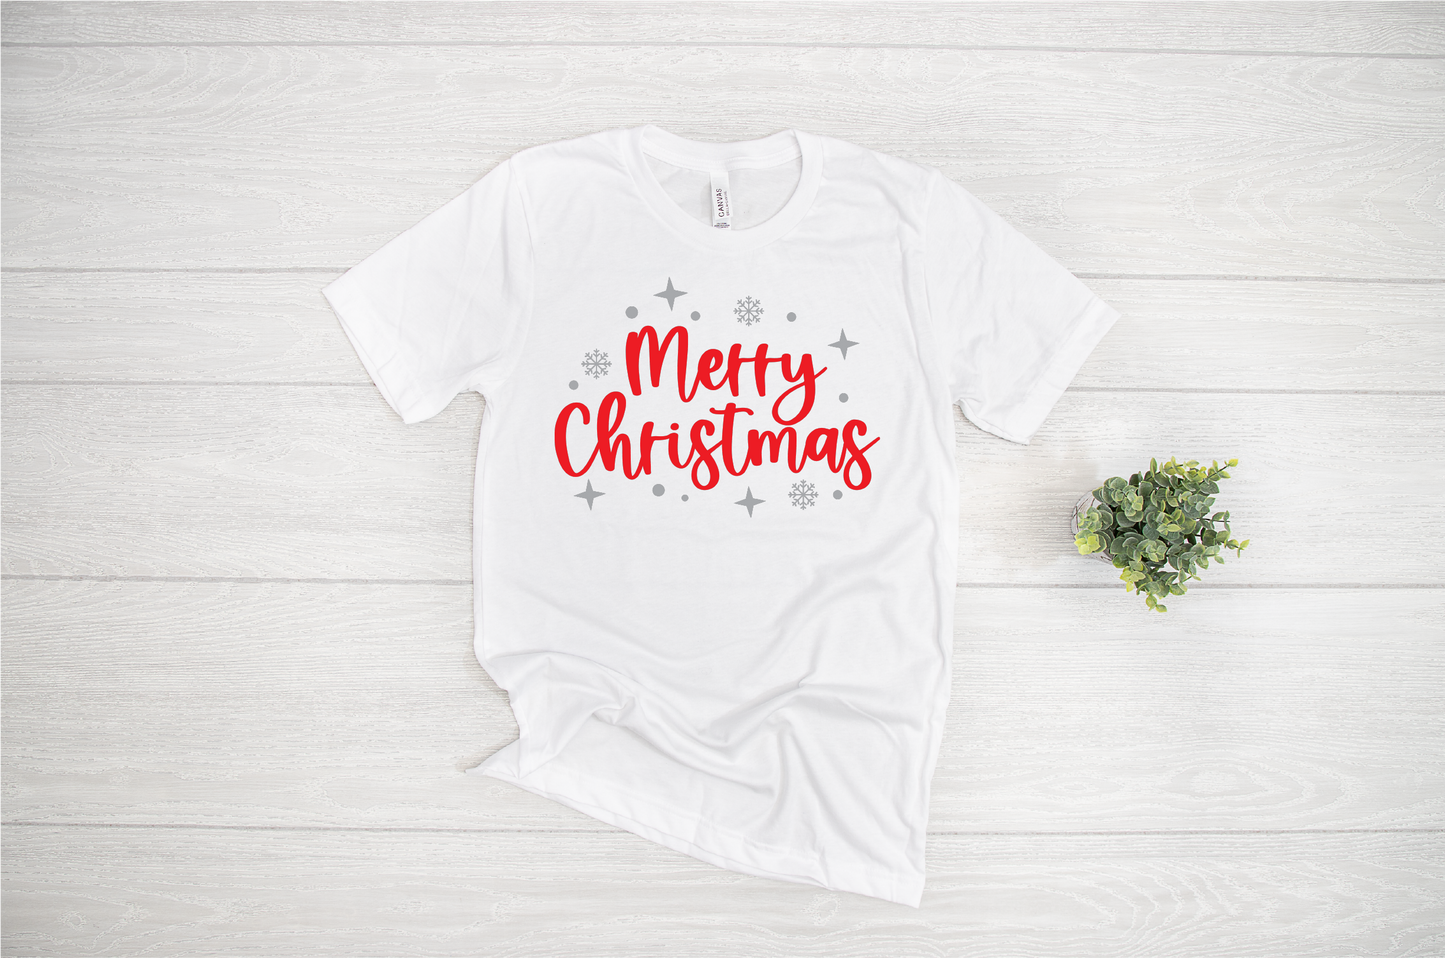 Merry Christmas SVG File